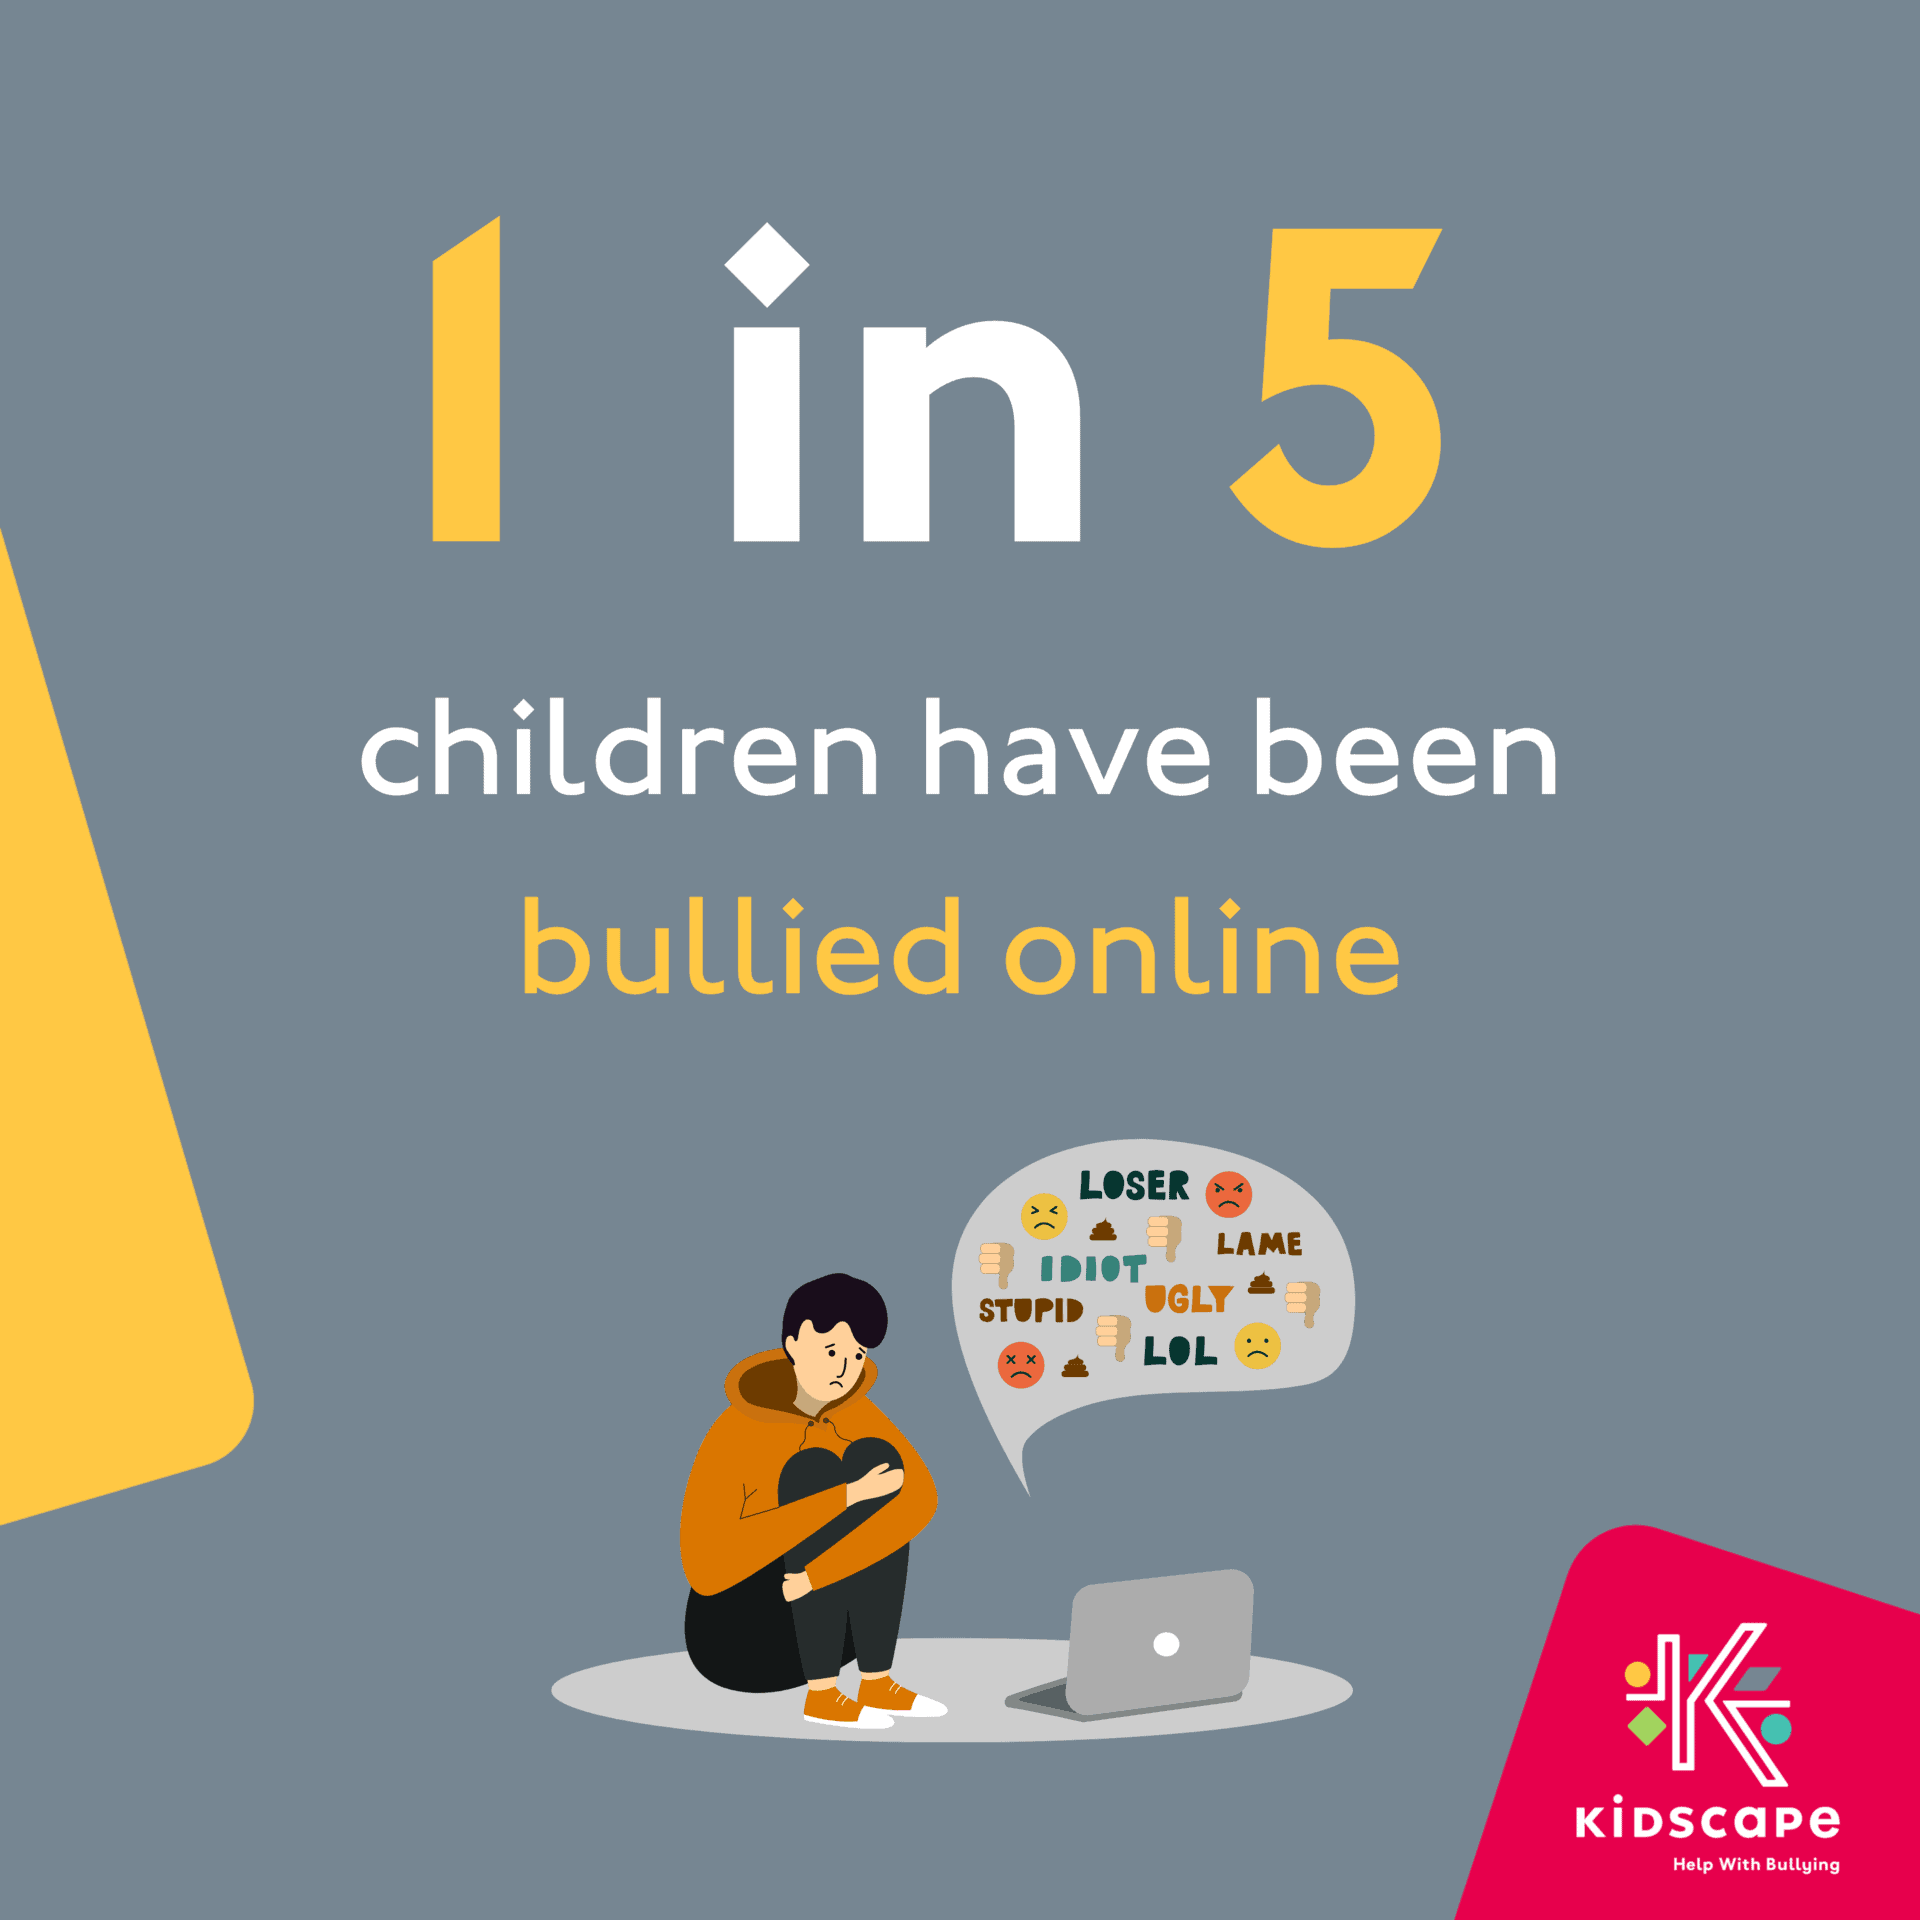 1 in 5 children have been bullied online